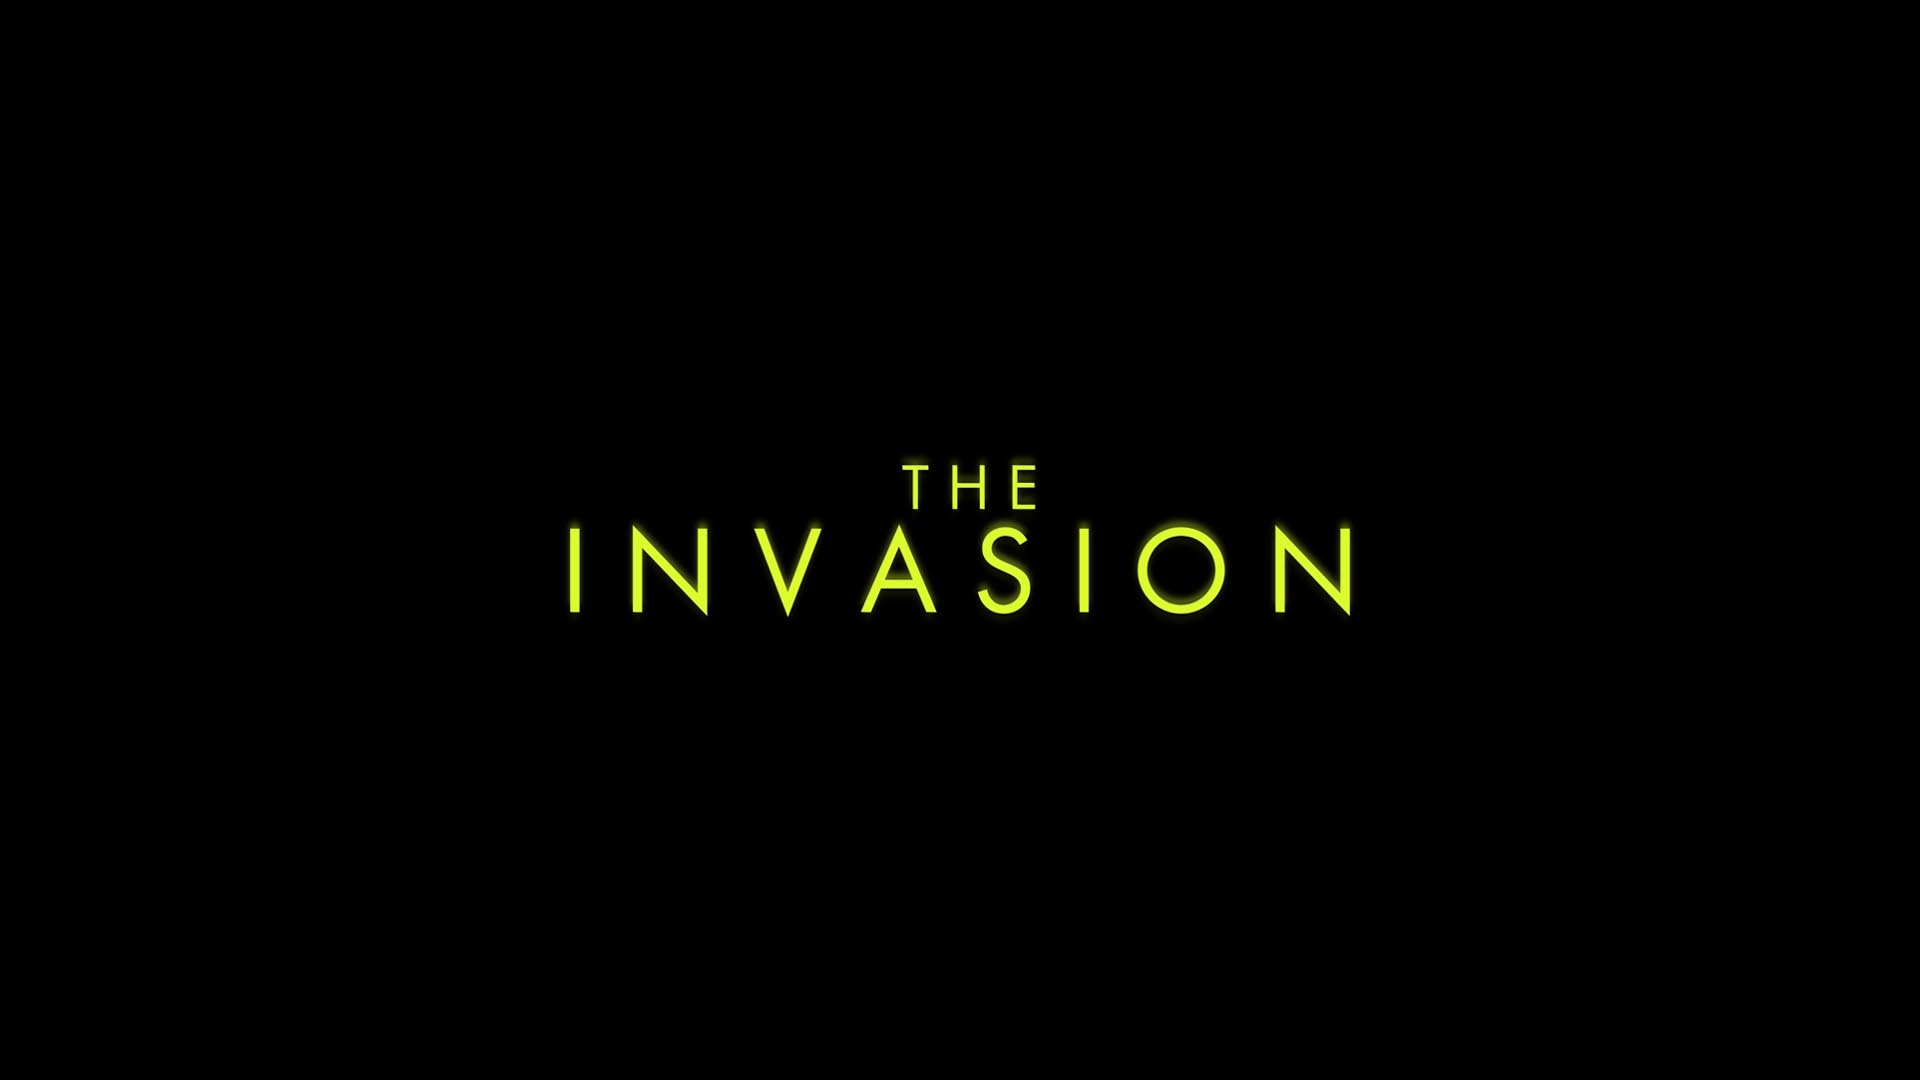 The Invasion HD Wallpaper